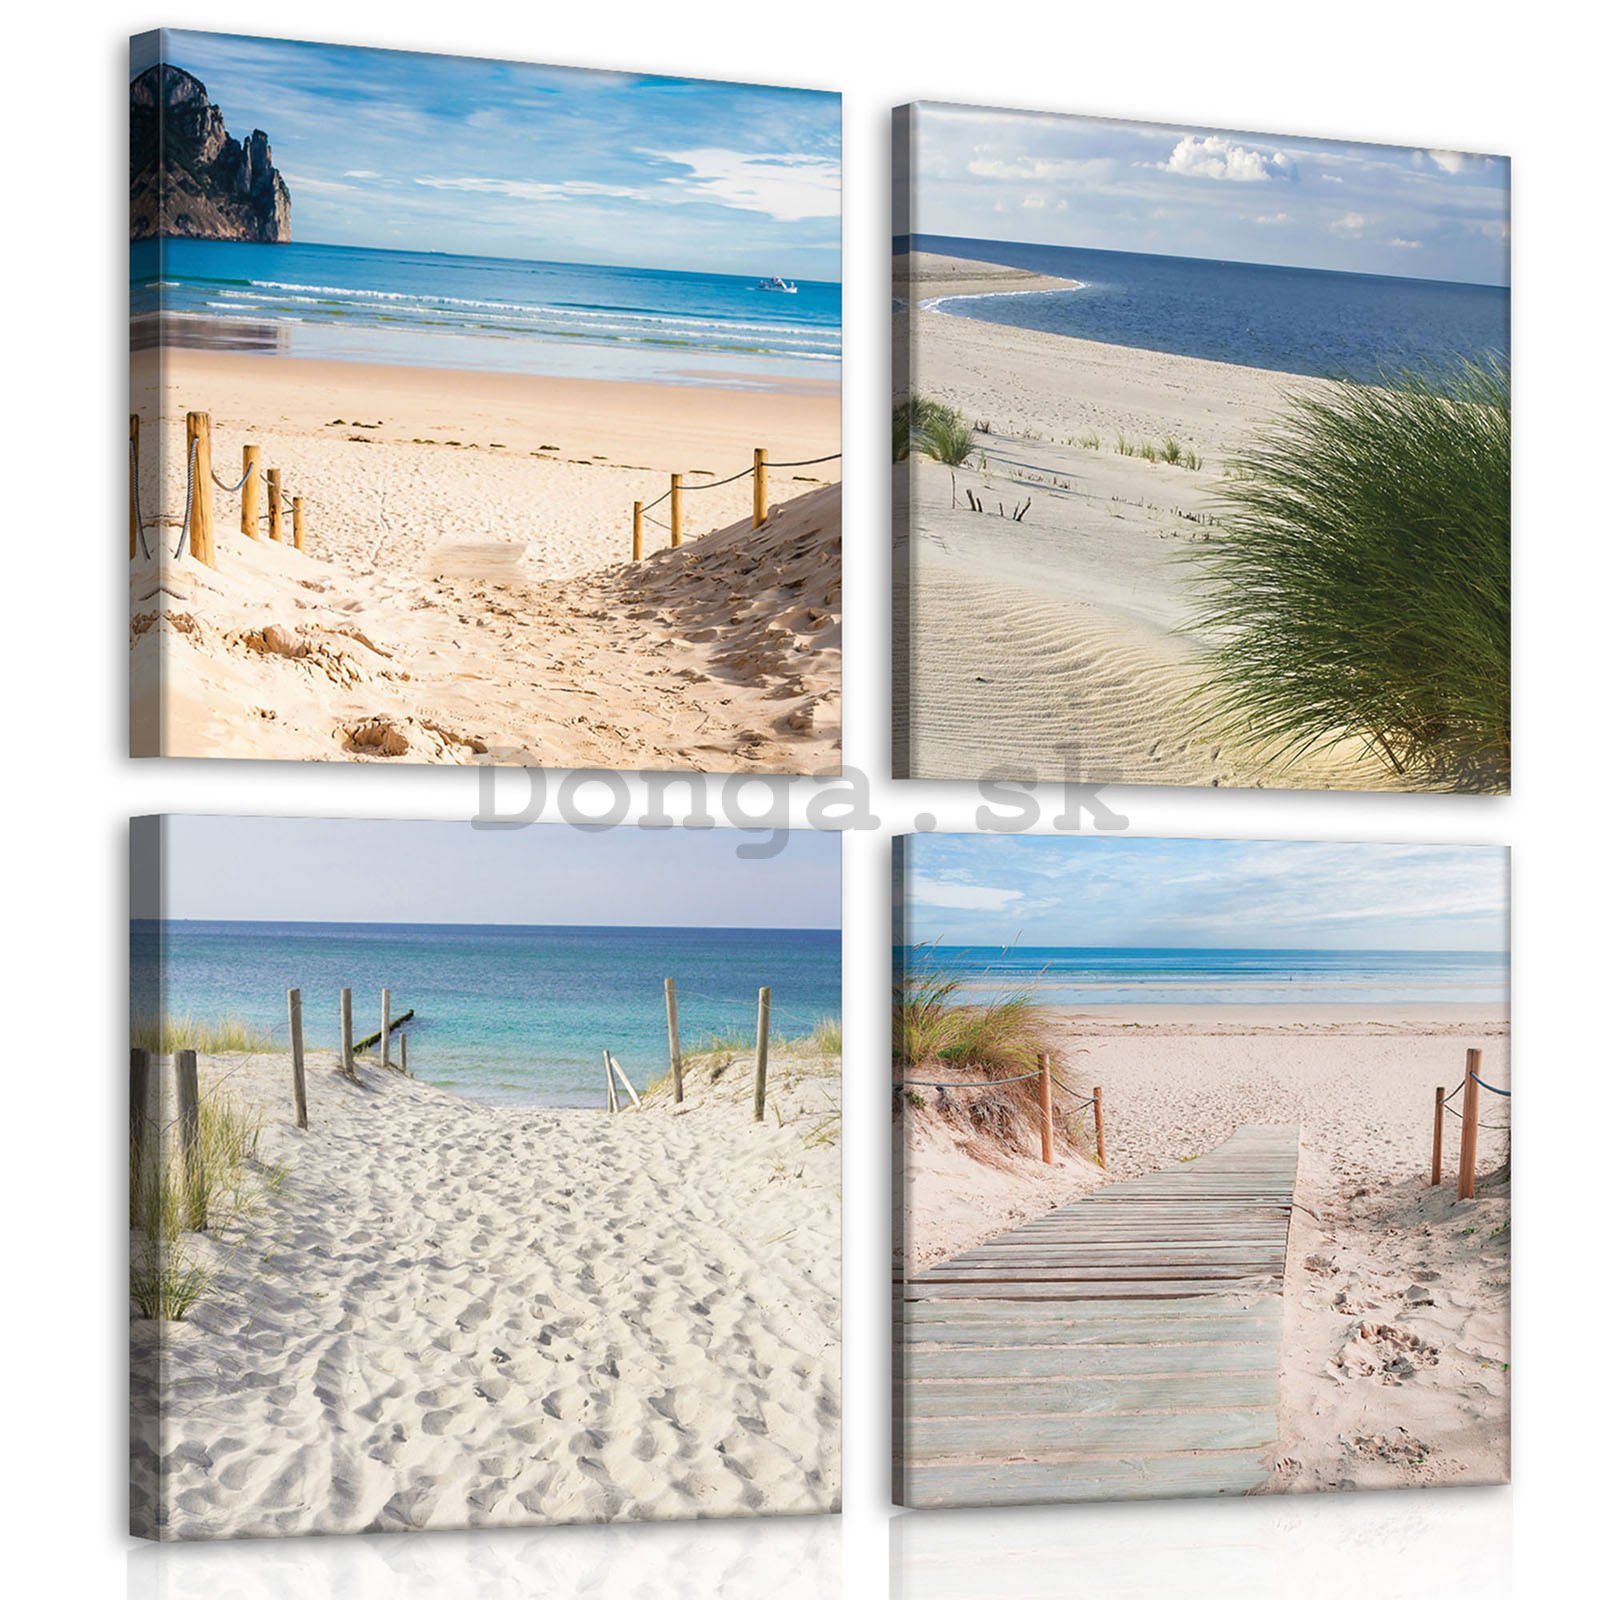 Obraz na plátne: Cesty na pláži (1) - set 4ks 25x25cm